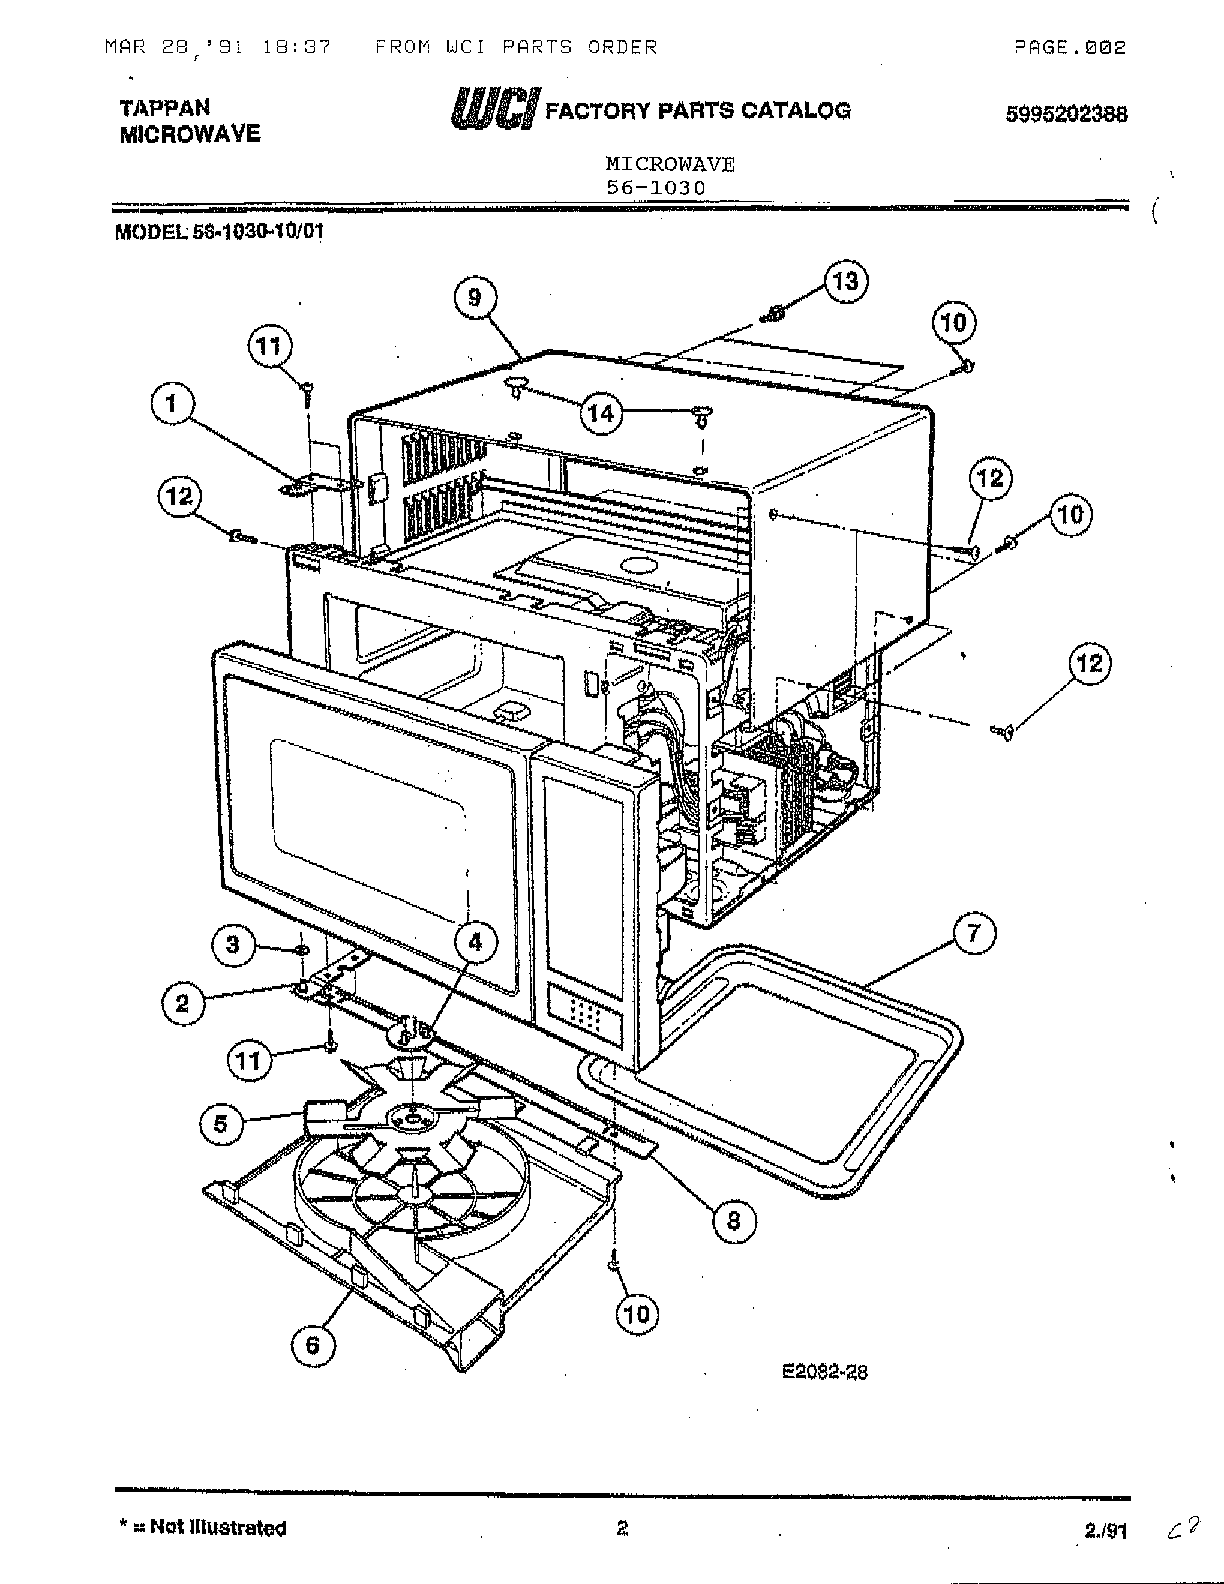 Microwave Diagram  U0026 Parts List For Model 561030 Frigidaire